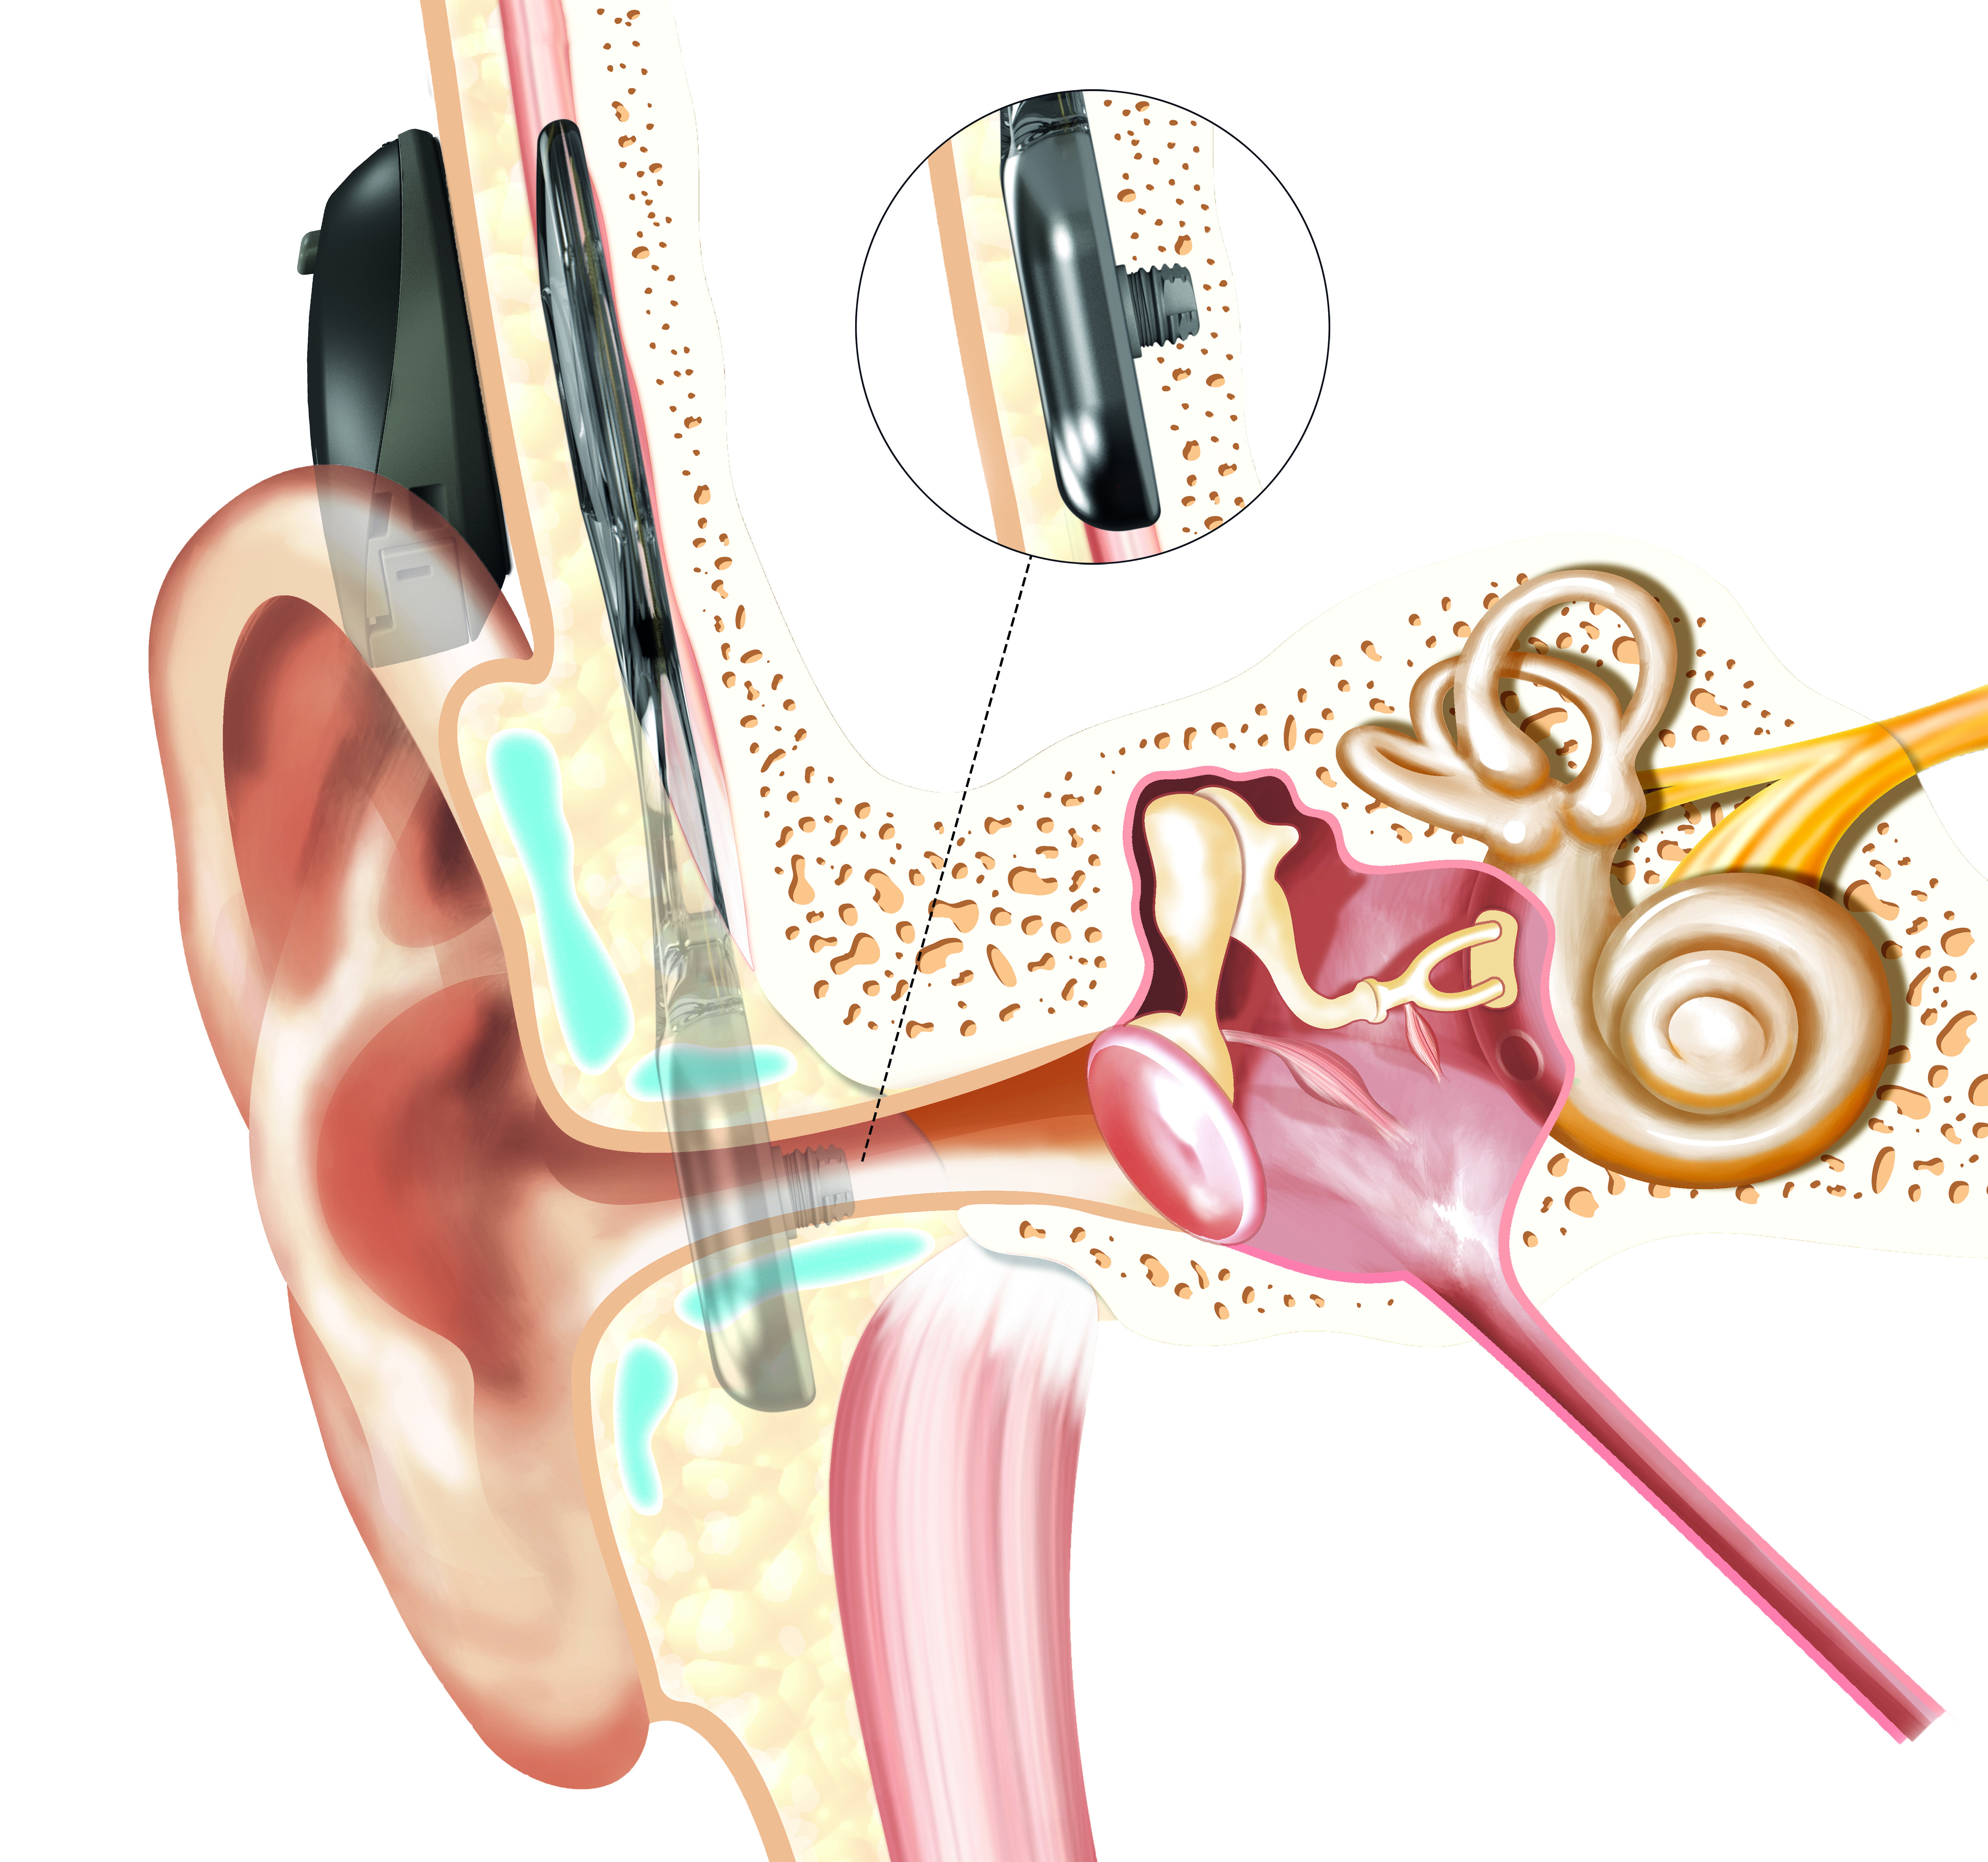 Sistema Osia Cochlear